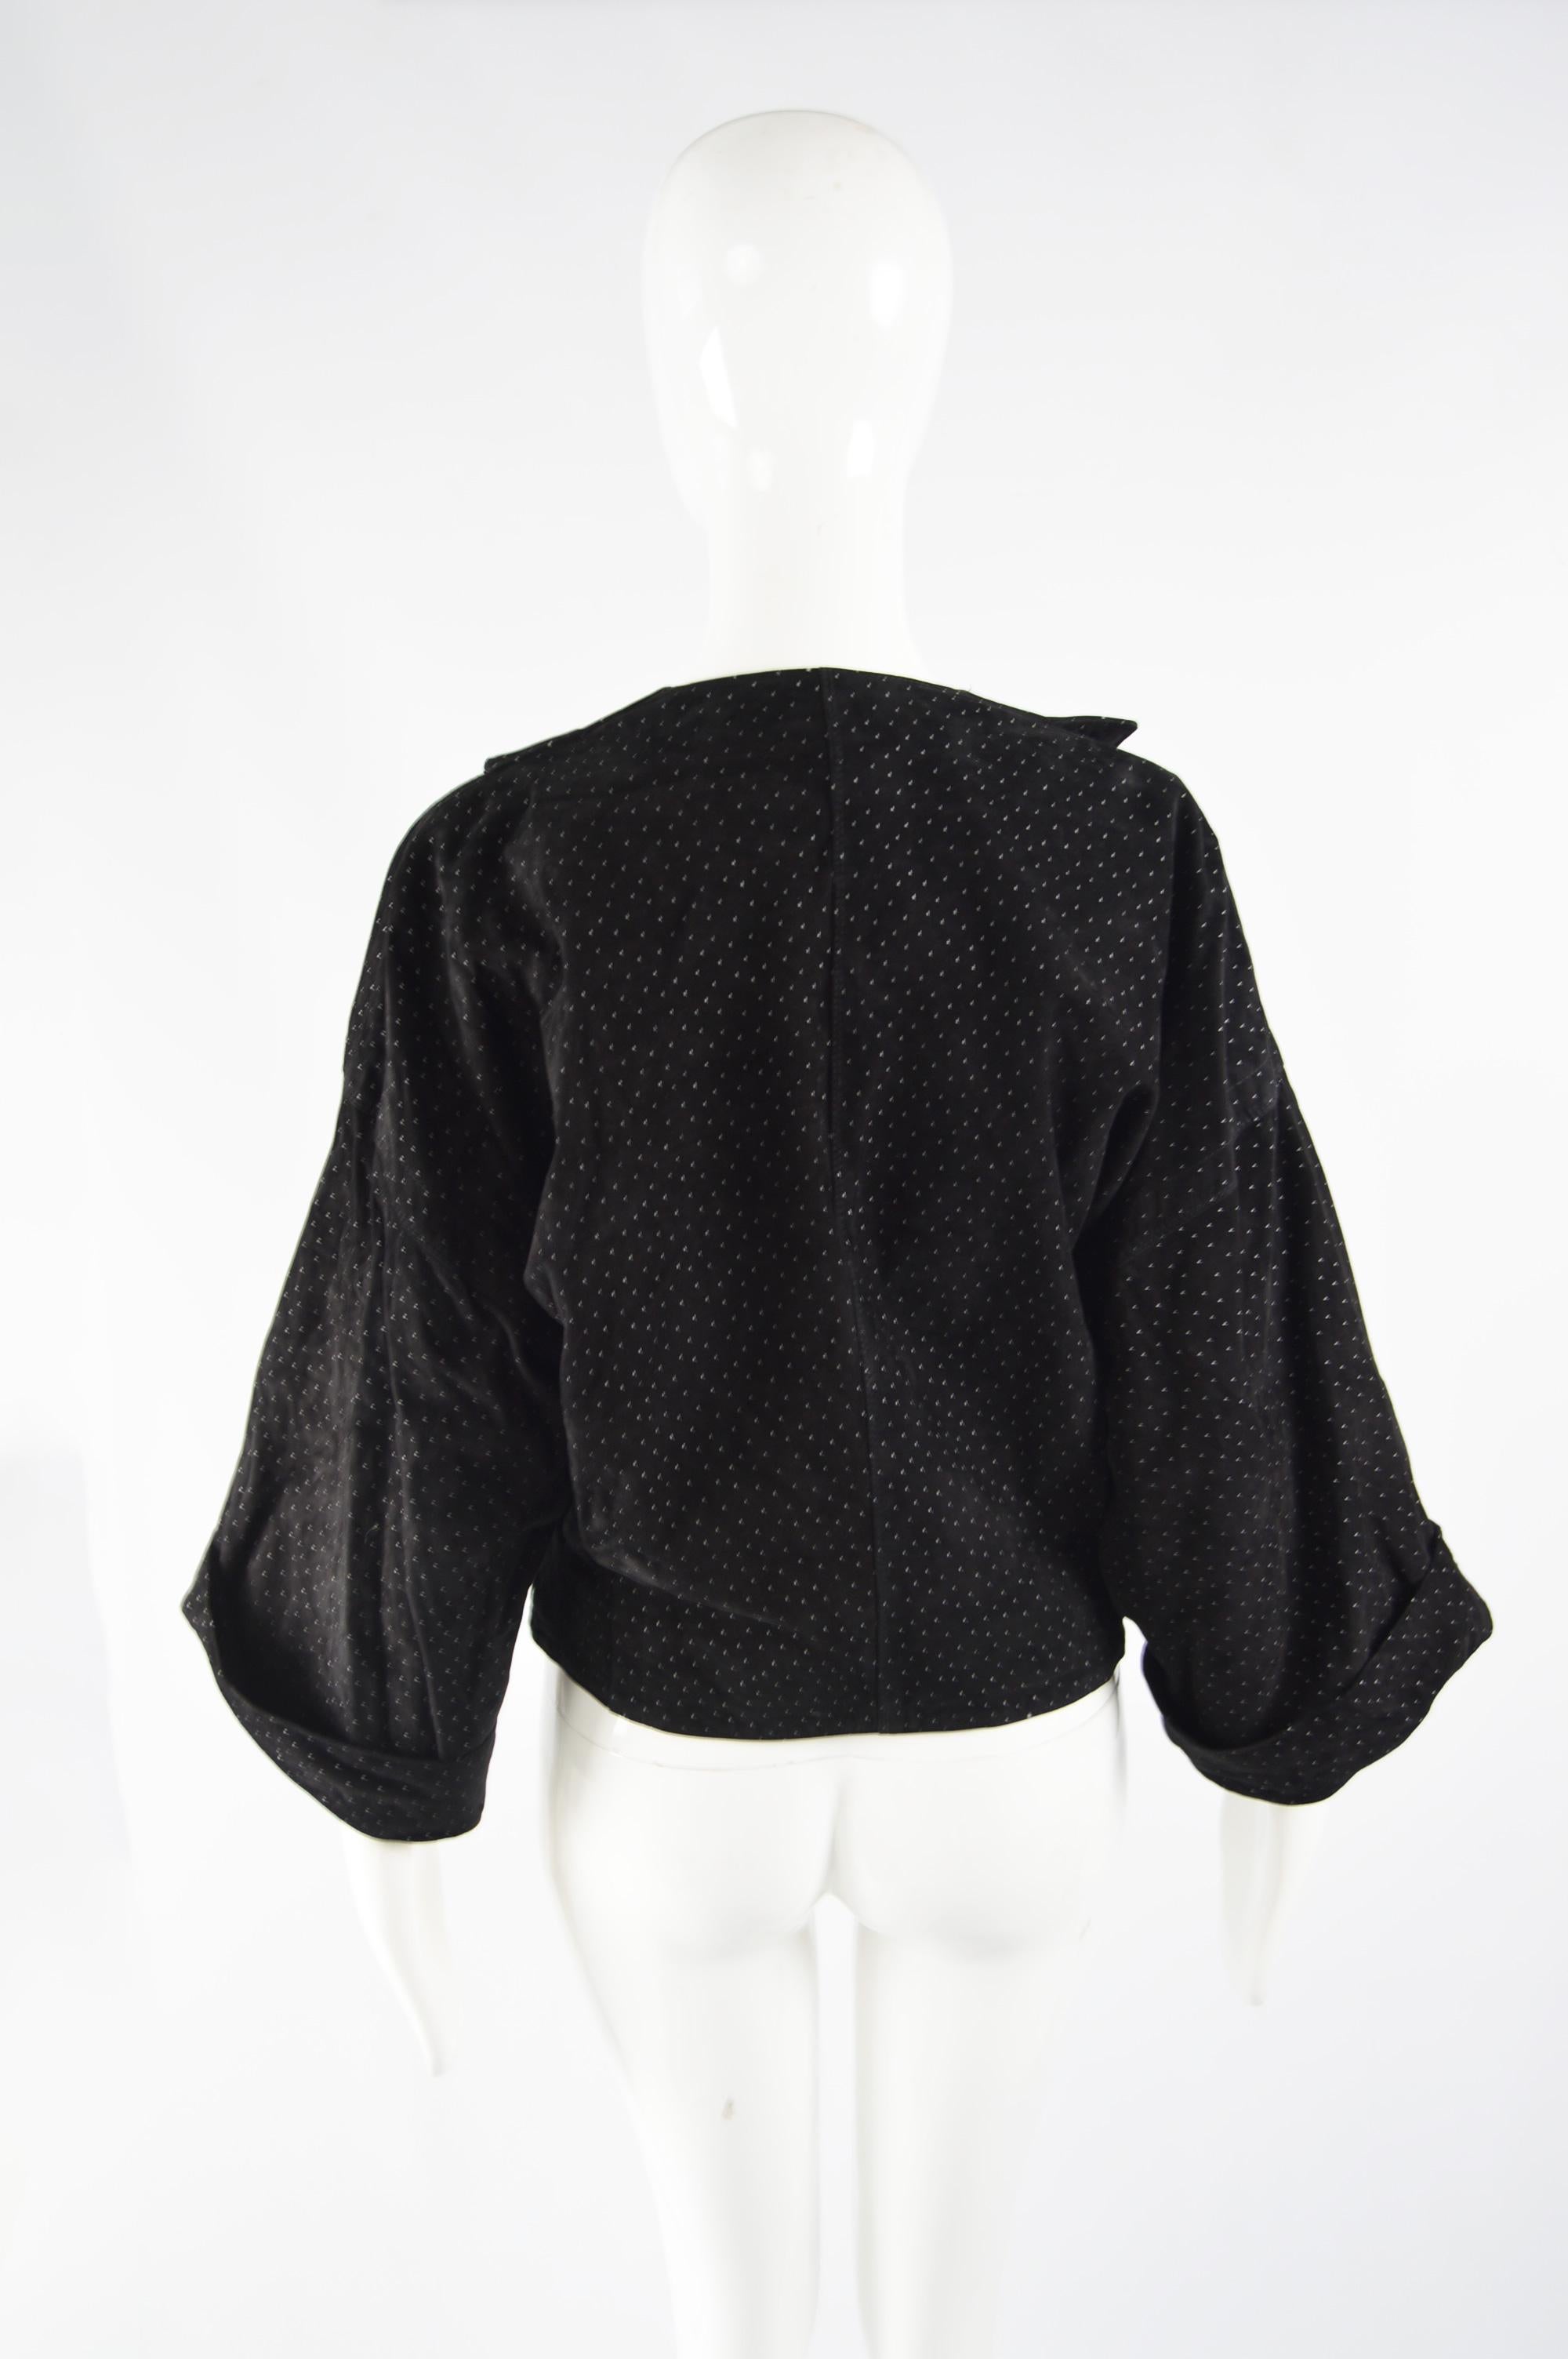 Gianni Versace Vintage 1980s Black Suede Jacket 2